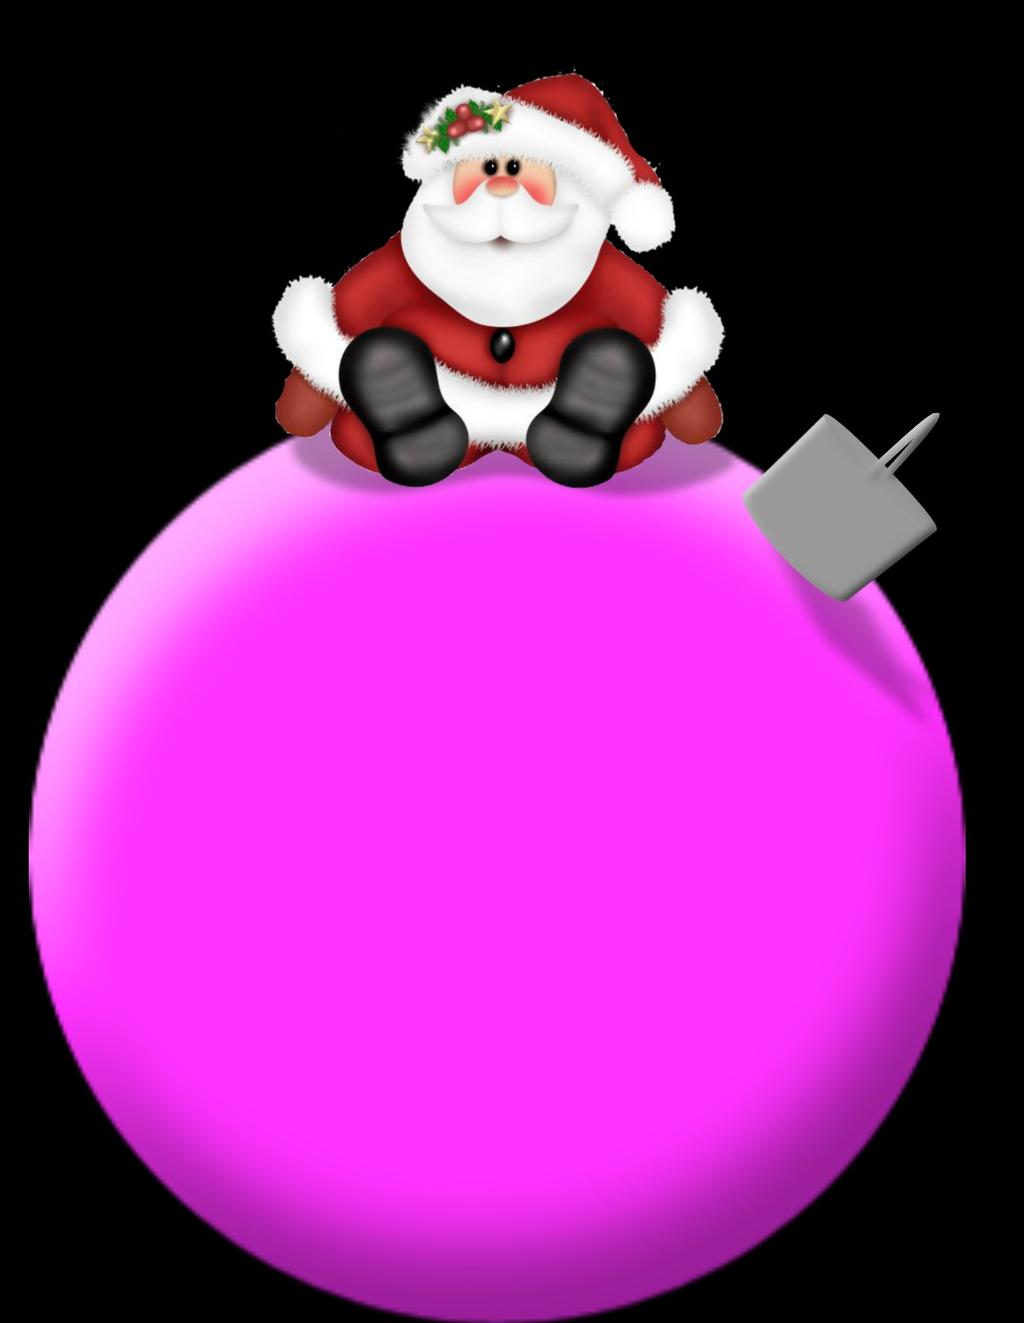 Saturday, December 2 Brunch at 10:30 Santa arrives at NOON!